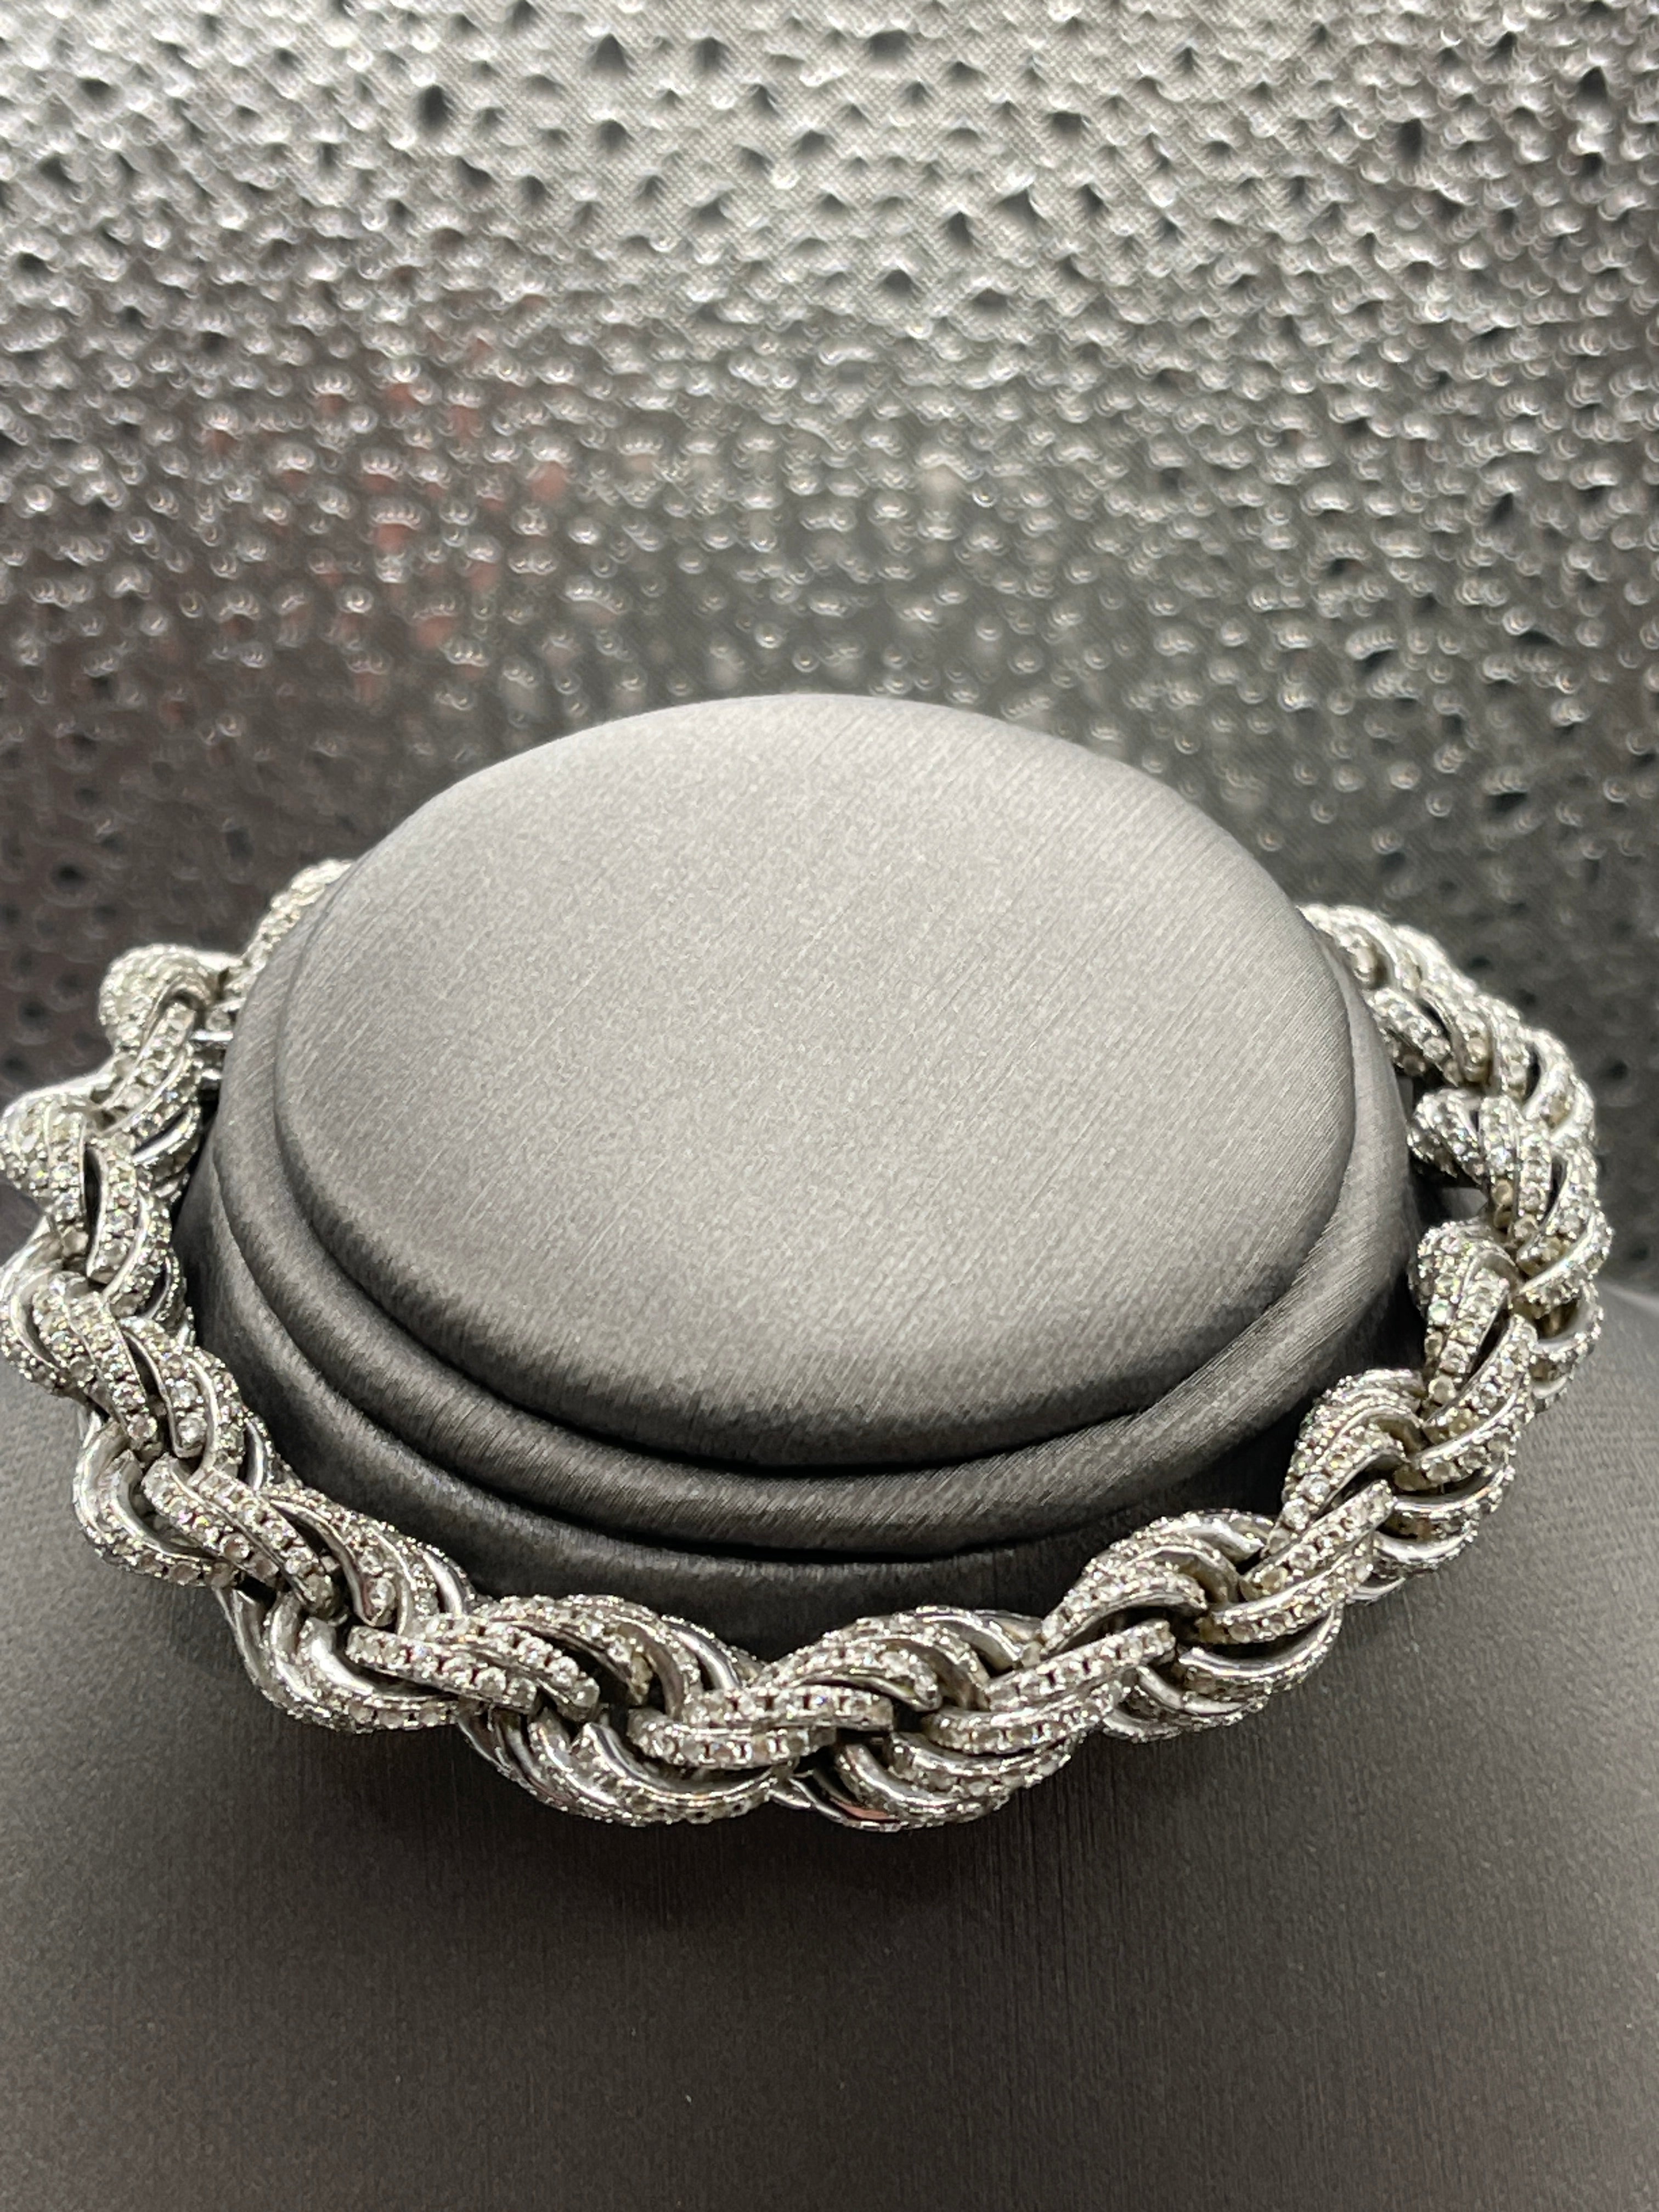 Rope Twist Chain Bracelet with Barrel Clasp